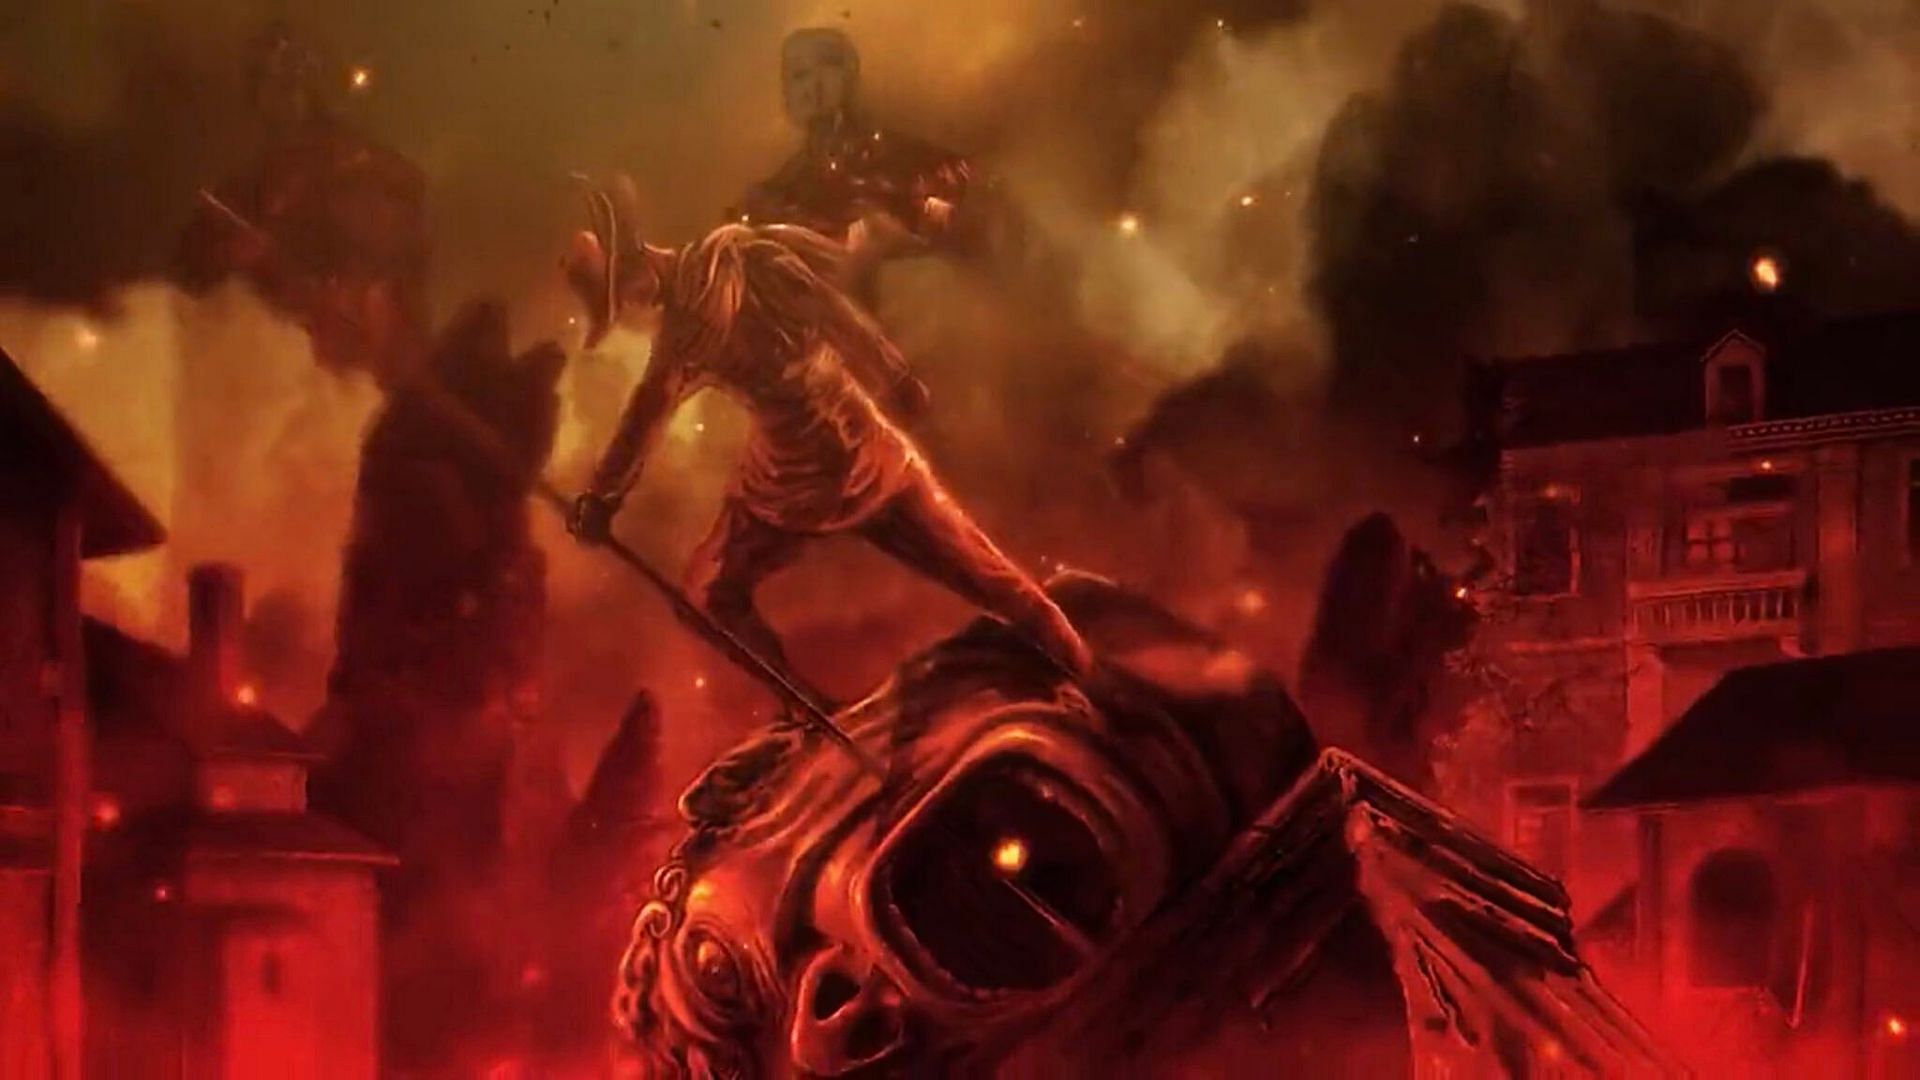 Helos statue as seen in Attack on Titan season 4 part 3 trailer (Image via MAPPA)